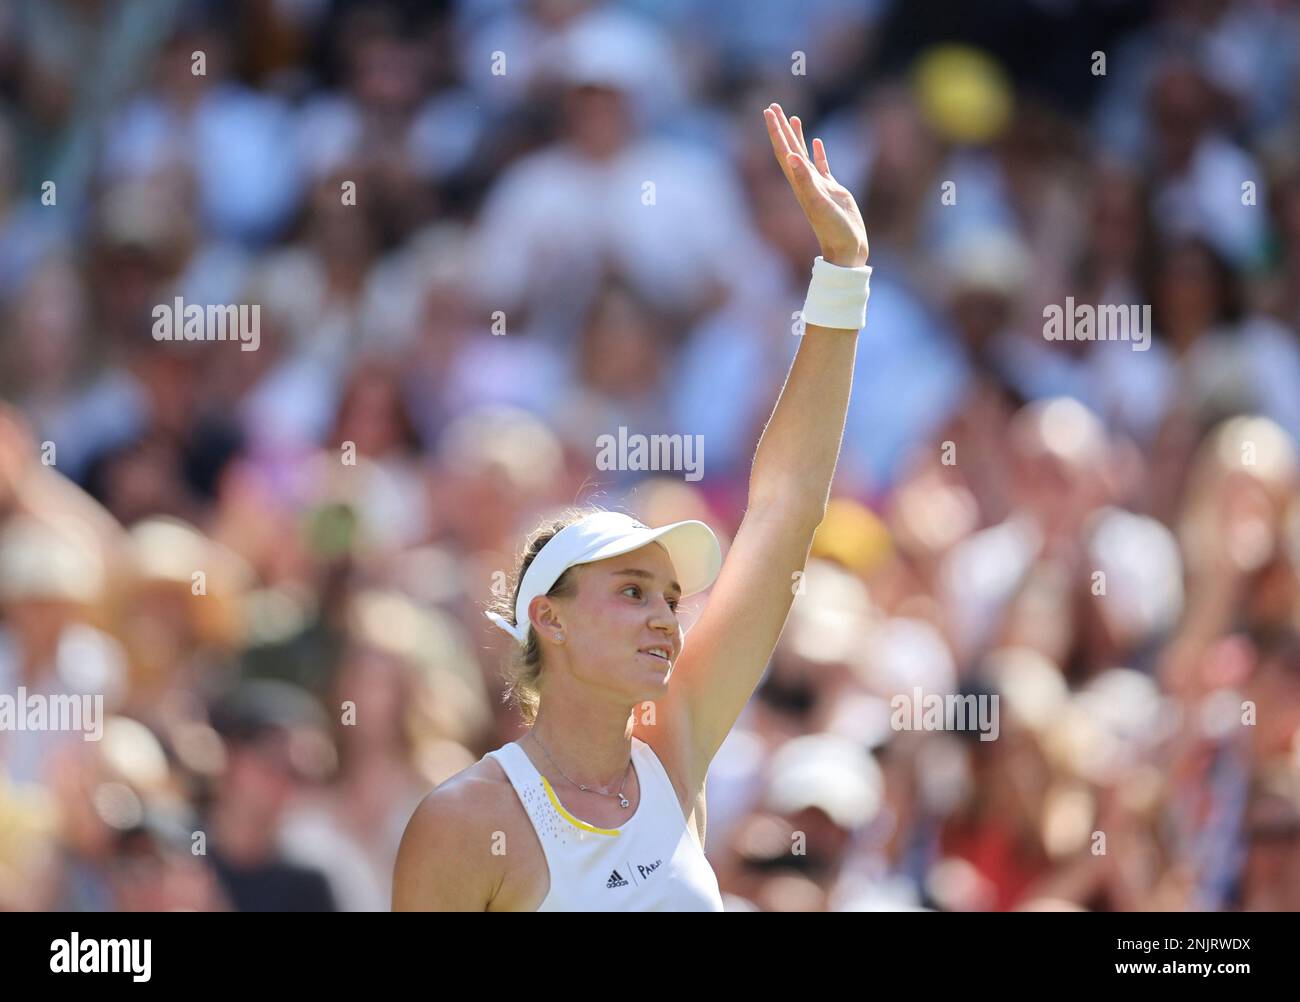 Wimbledon 2022: Elena Rybakina wins Kazakhstan's first Grand Slam